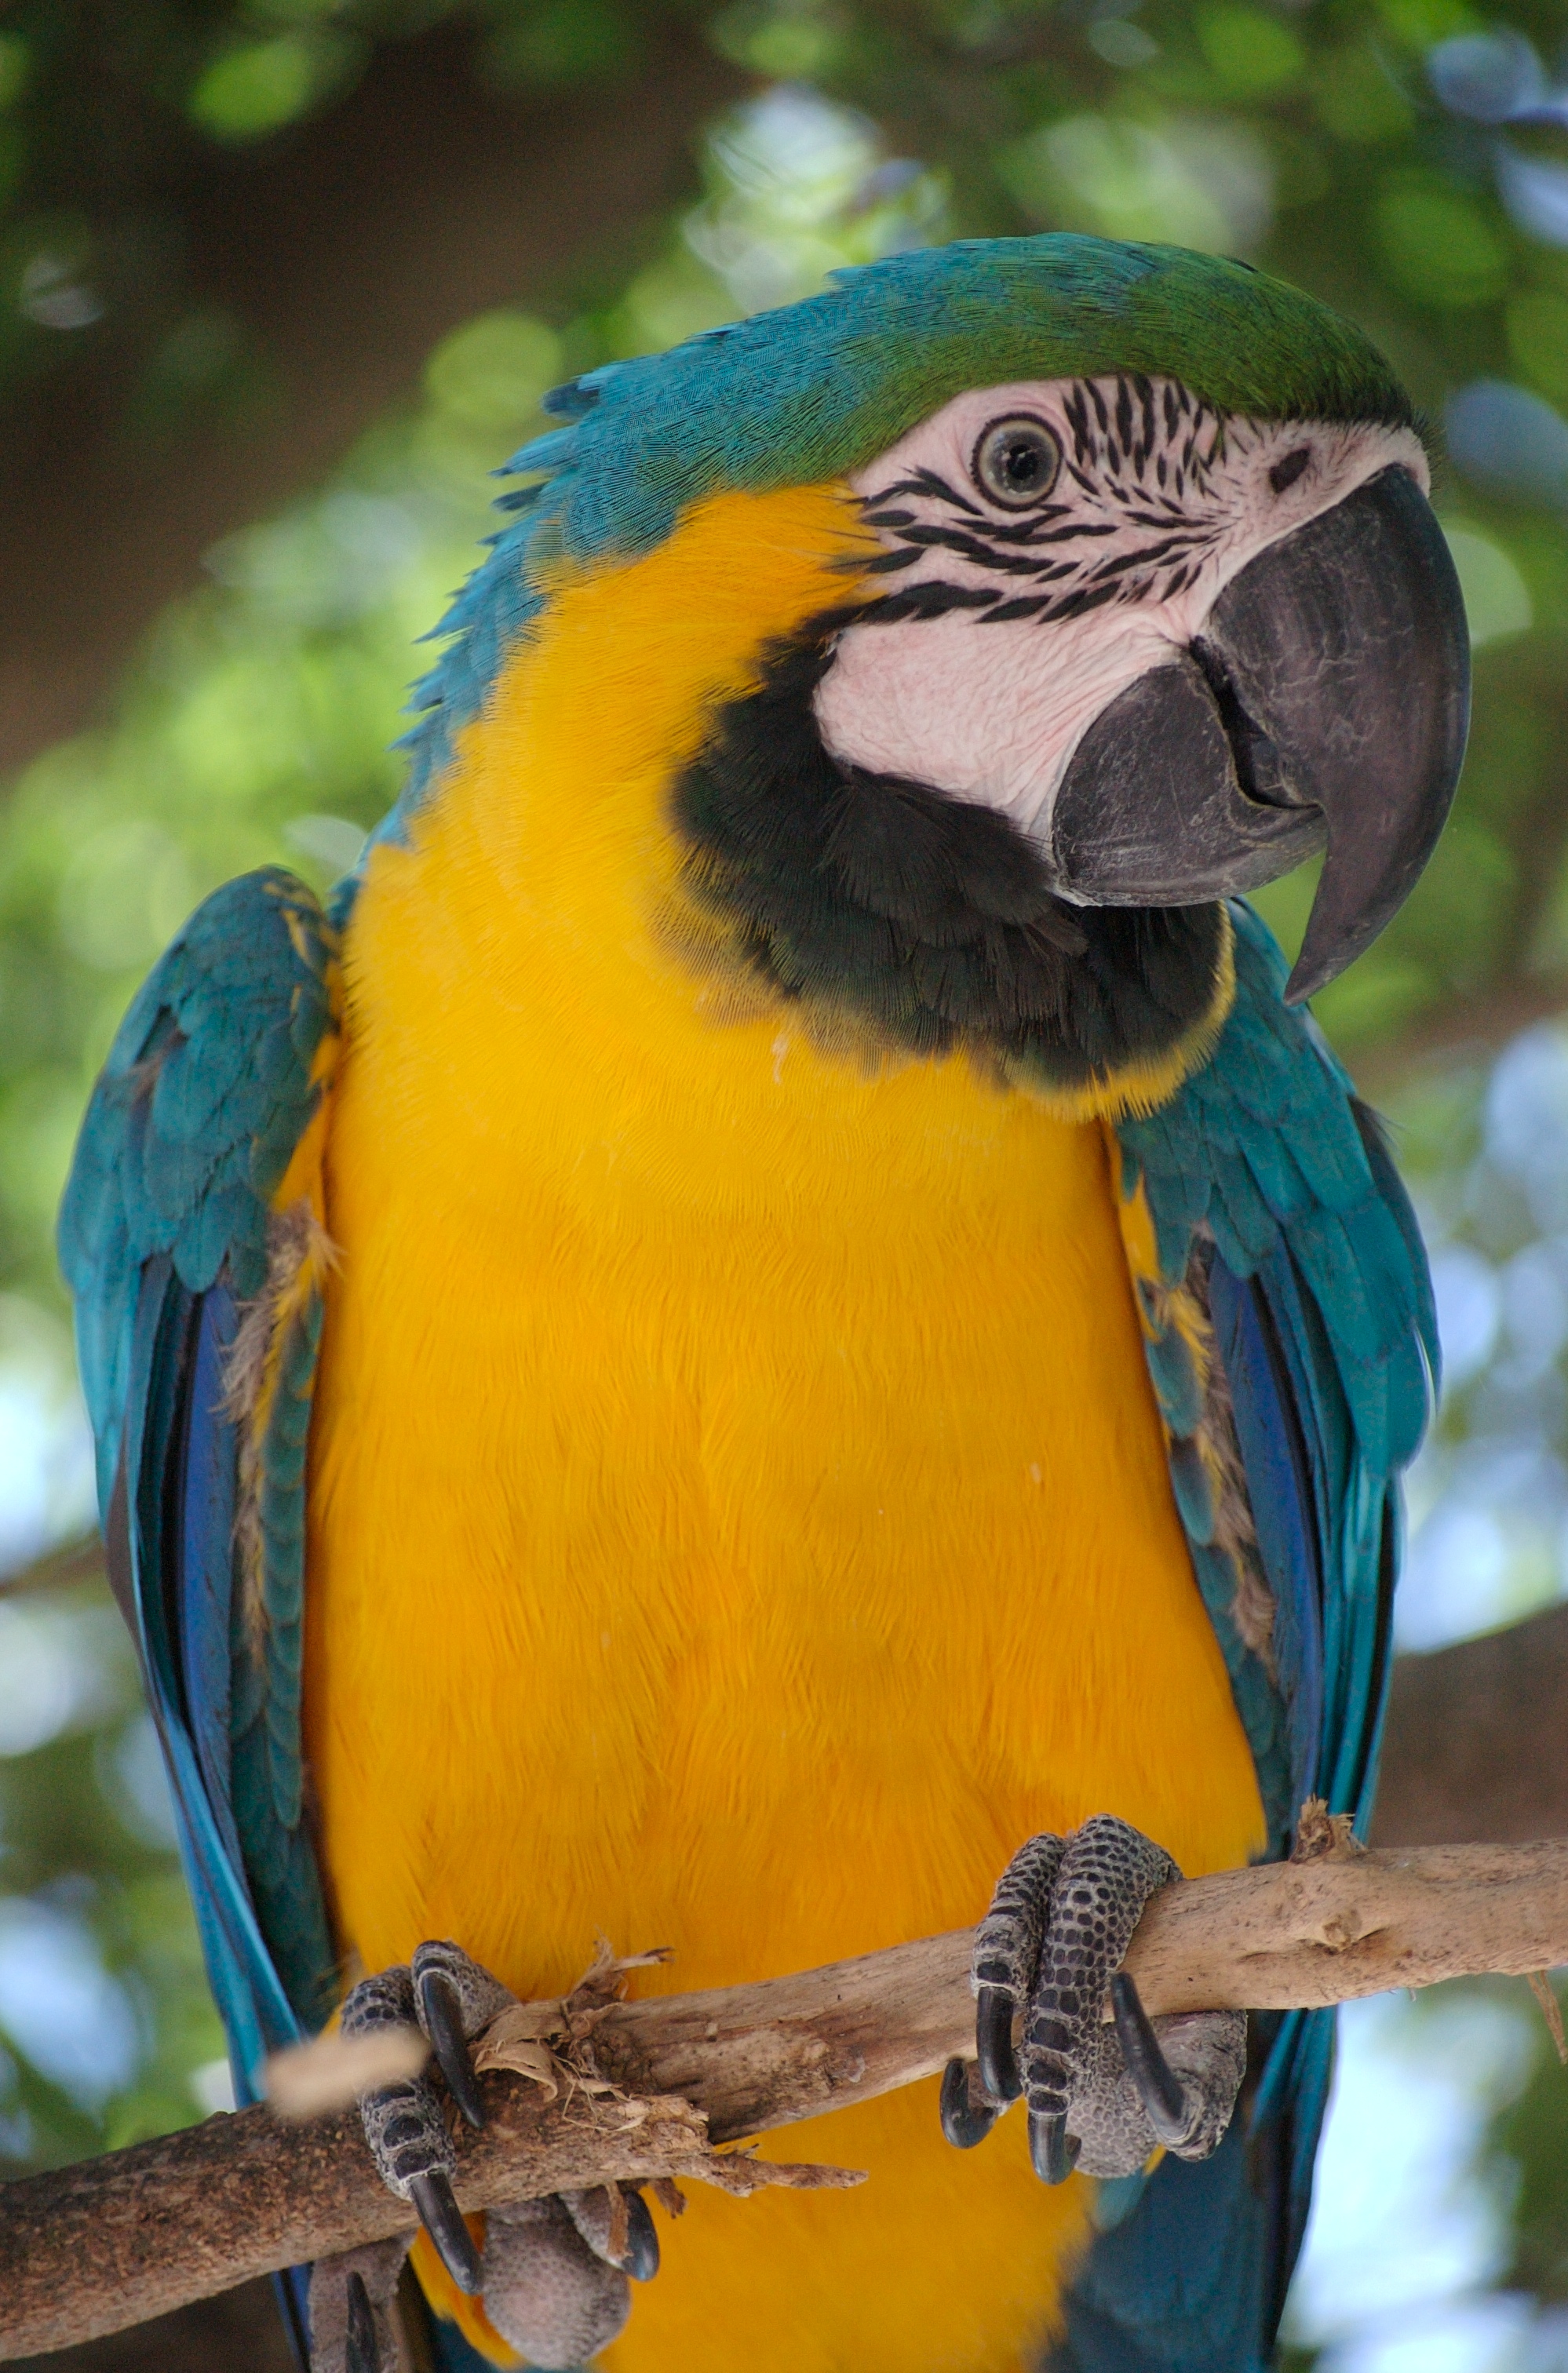 FileAra ararauna Blueandyellow Macaw in a tree.jpg Wikipedia